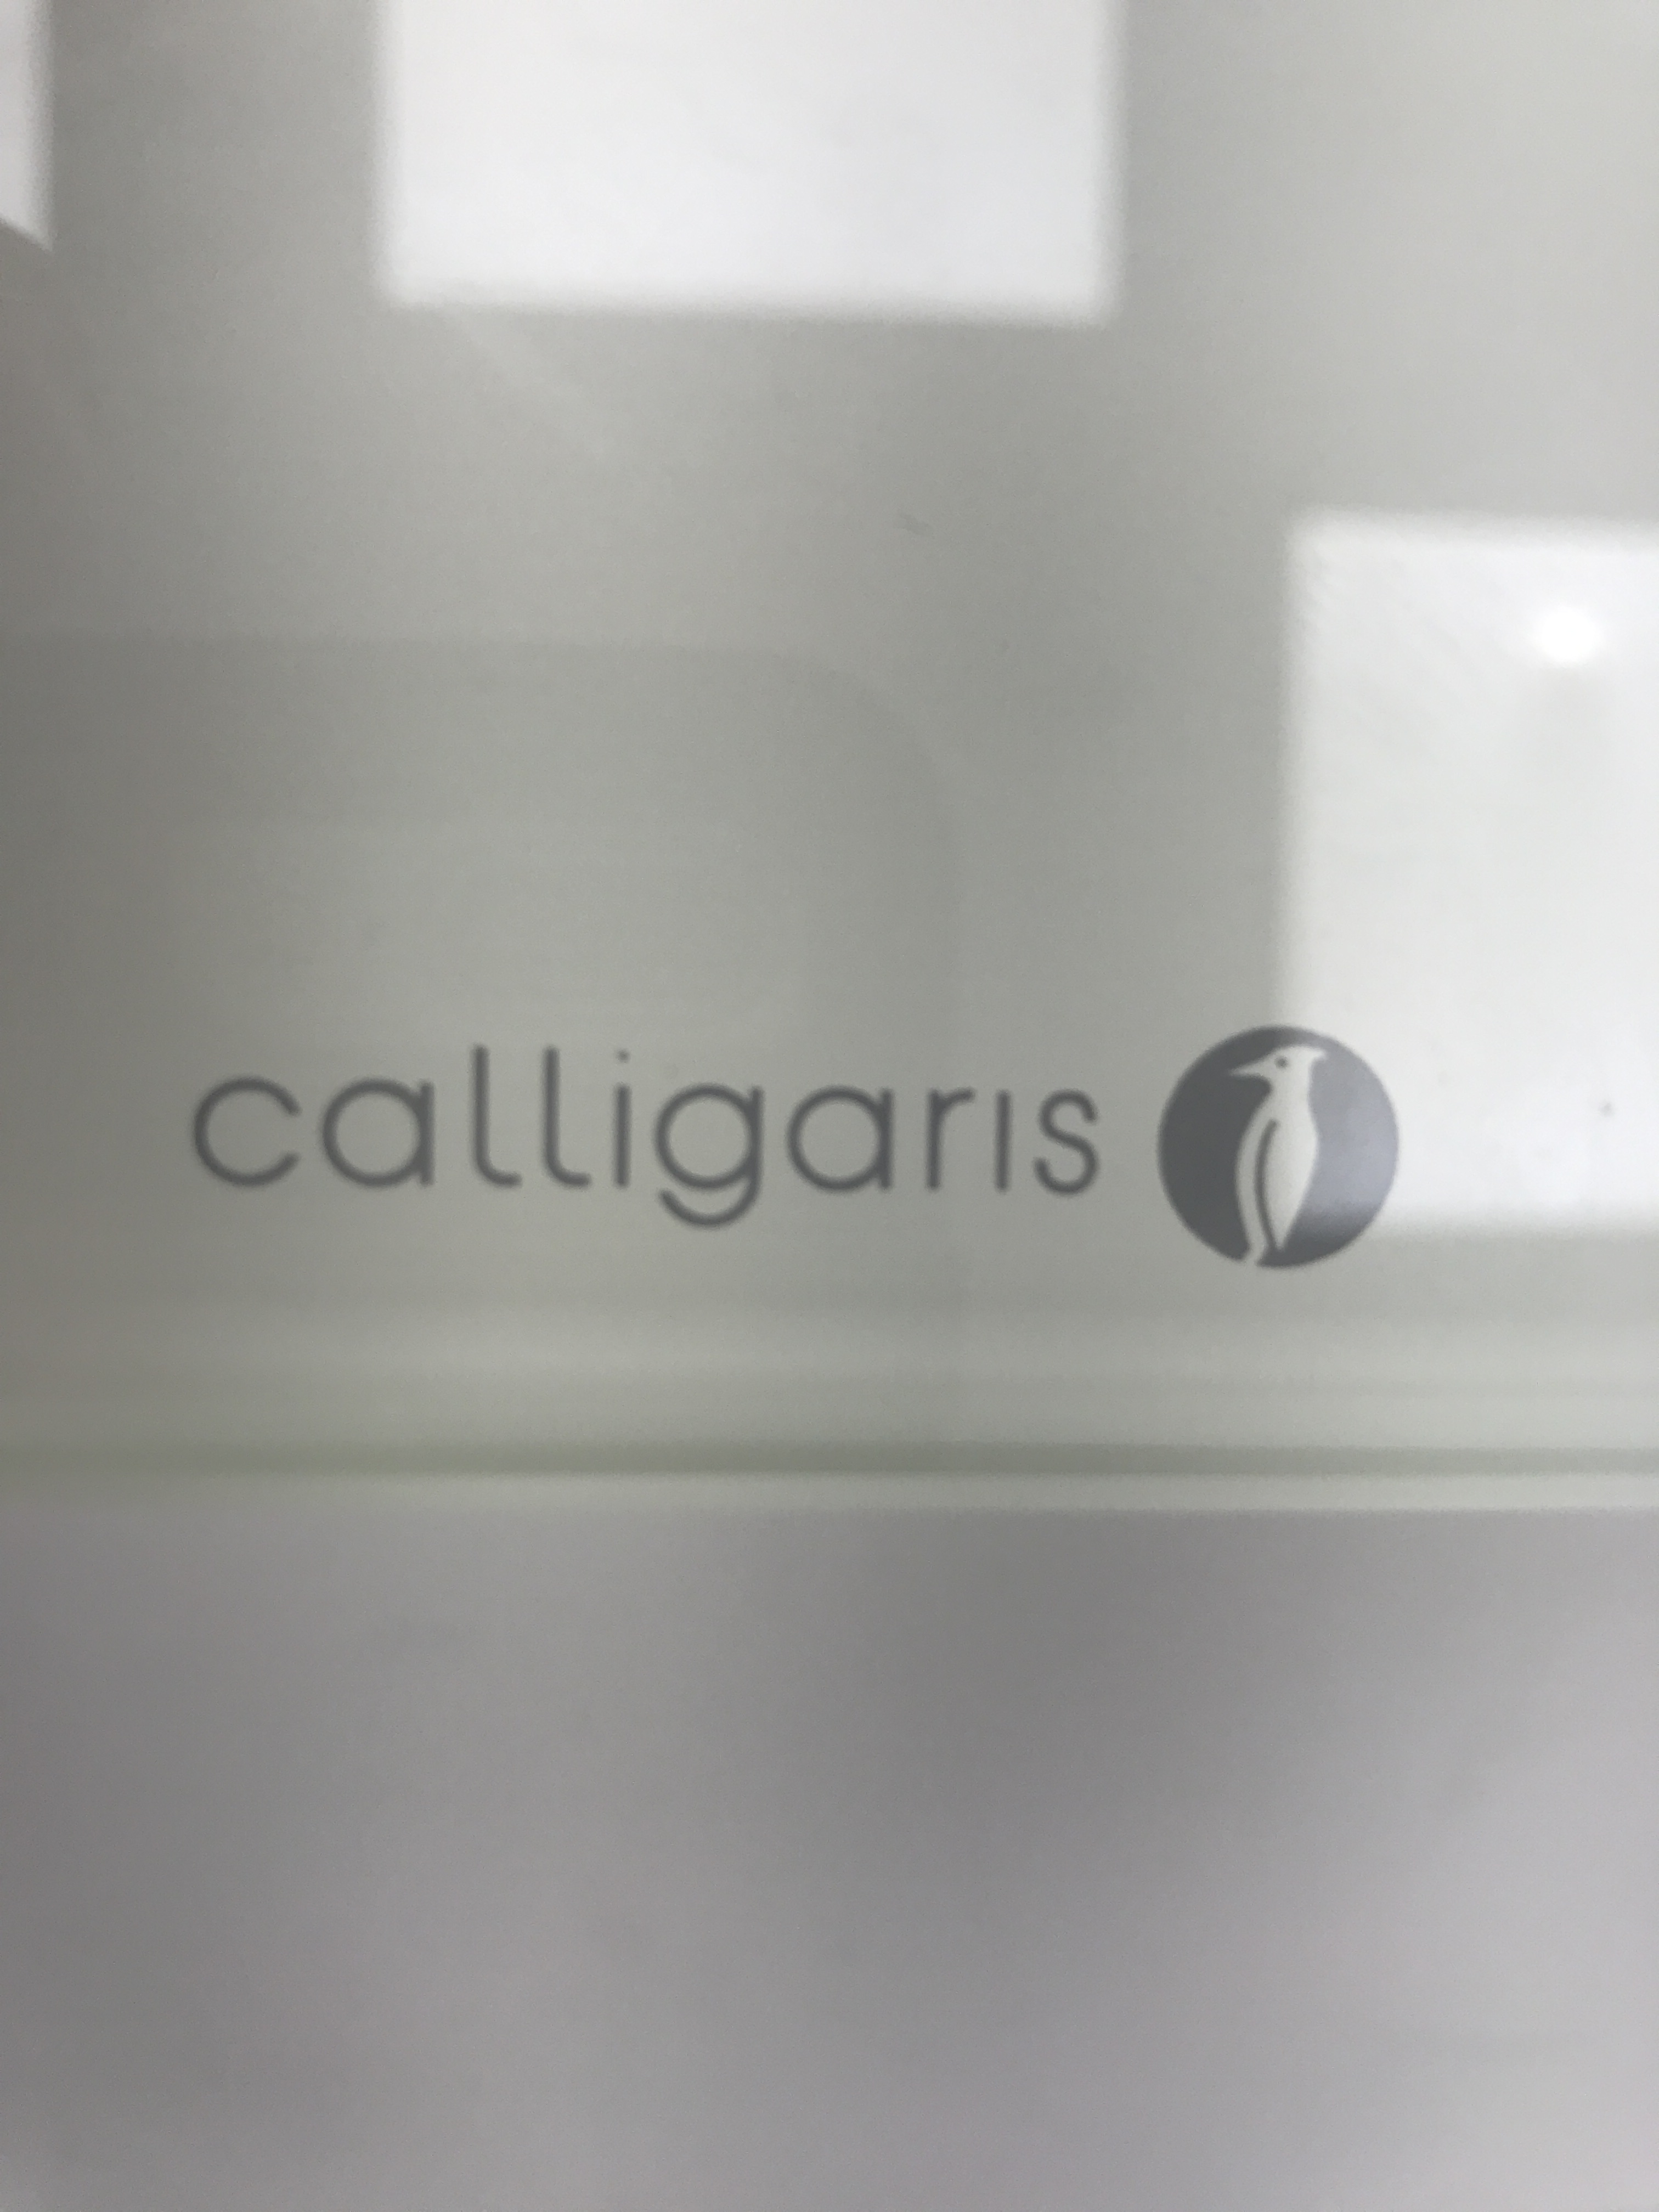 Calligaris gloss white rectangular glass top extending dining table (W221cm, H75cm, - Image 3 of 5